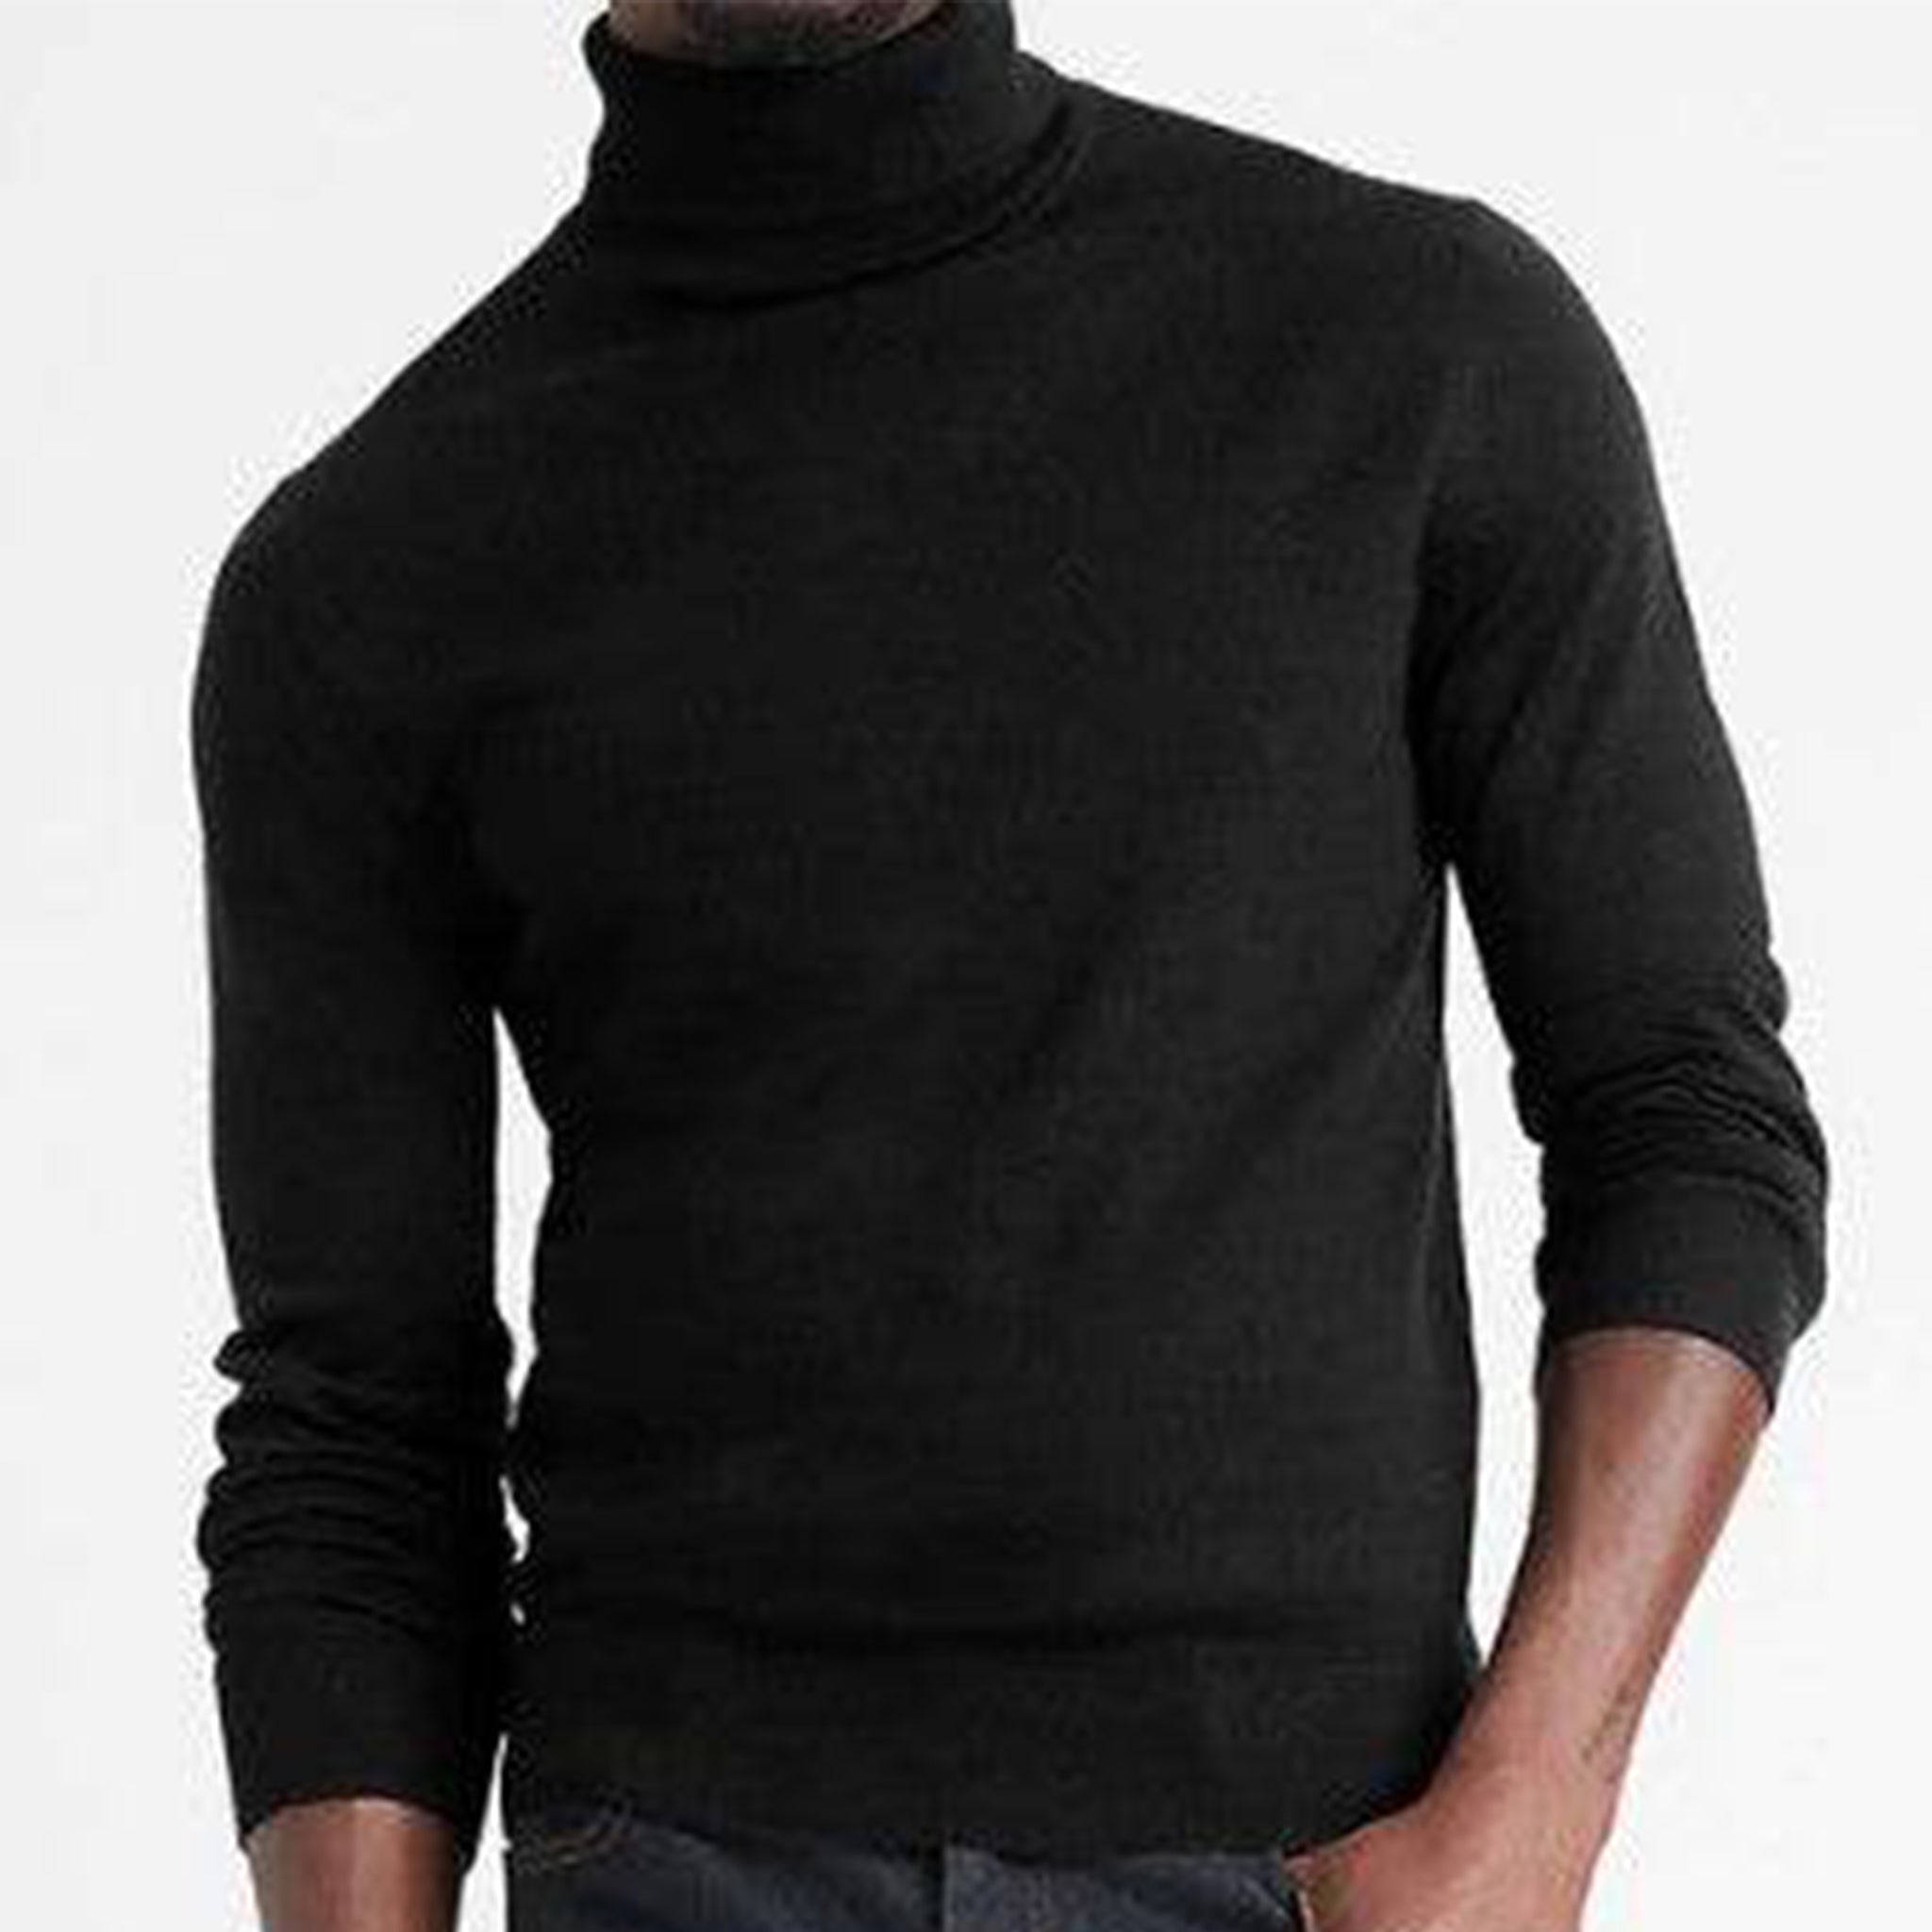 Men's Black Turtle Neck Sweater